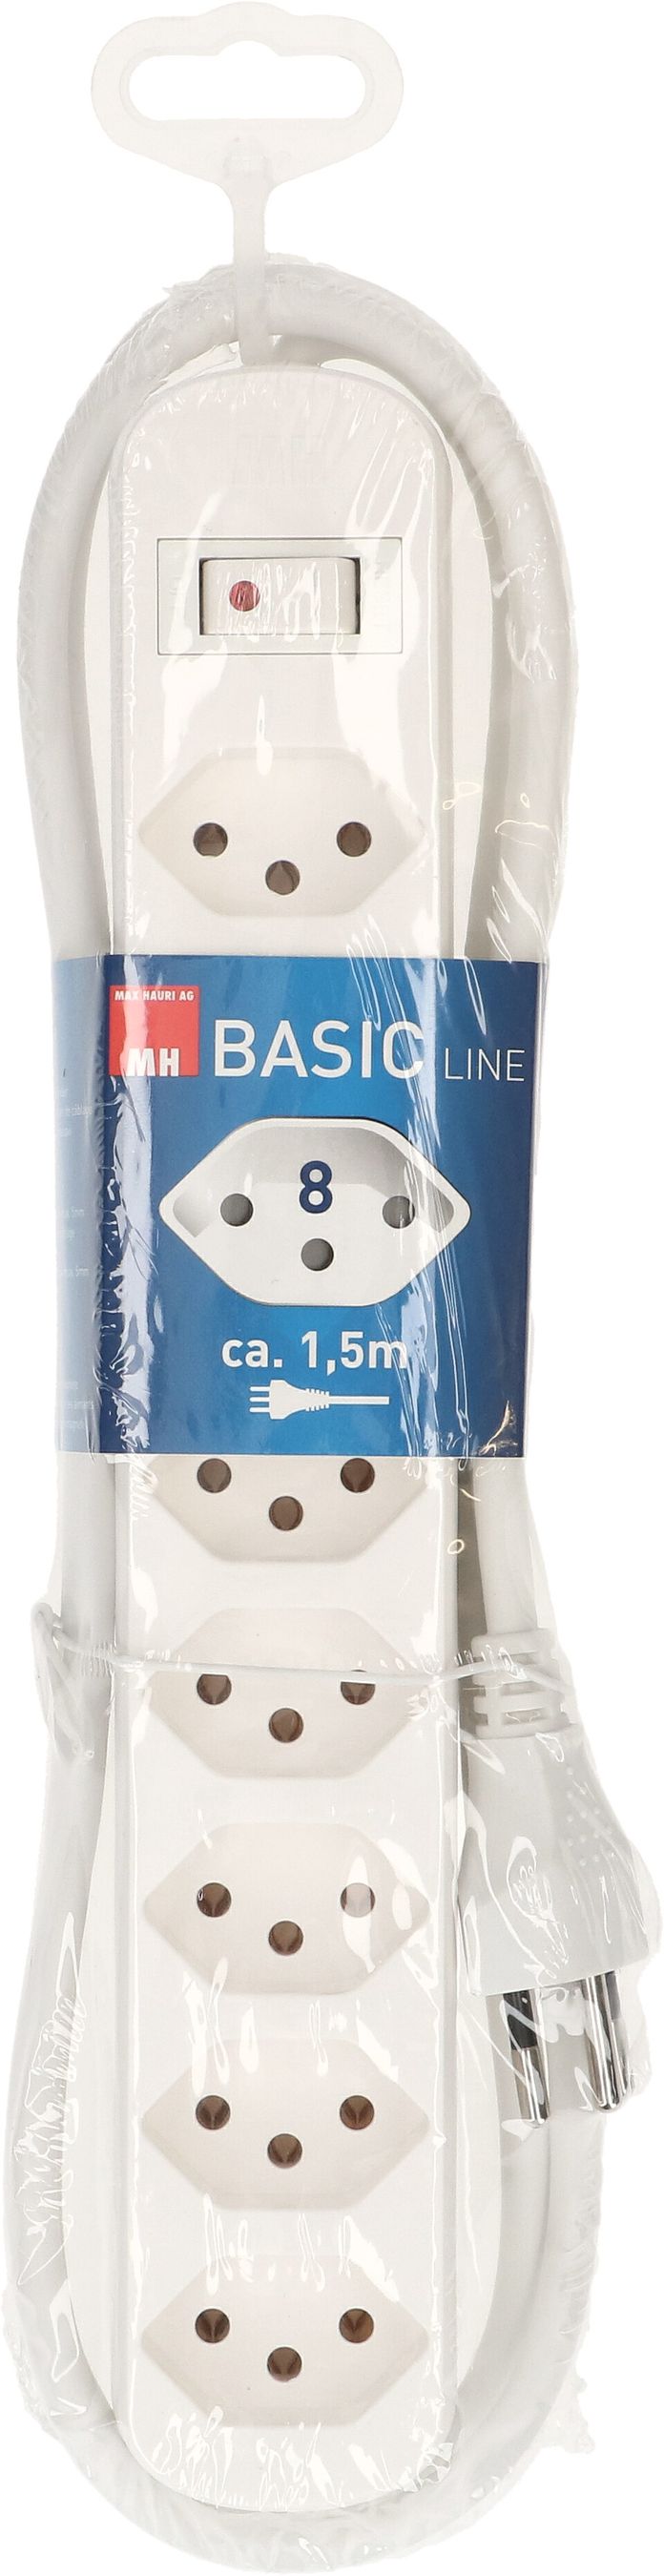 multipresa Basic Line 8x tipo 13 bianco interruttore 1.5m